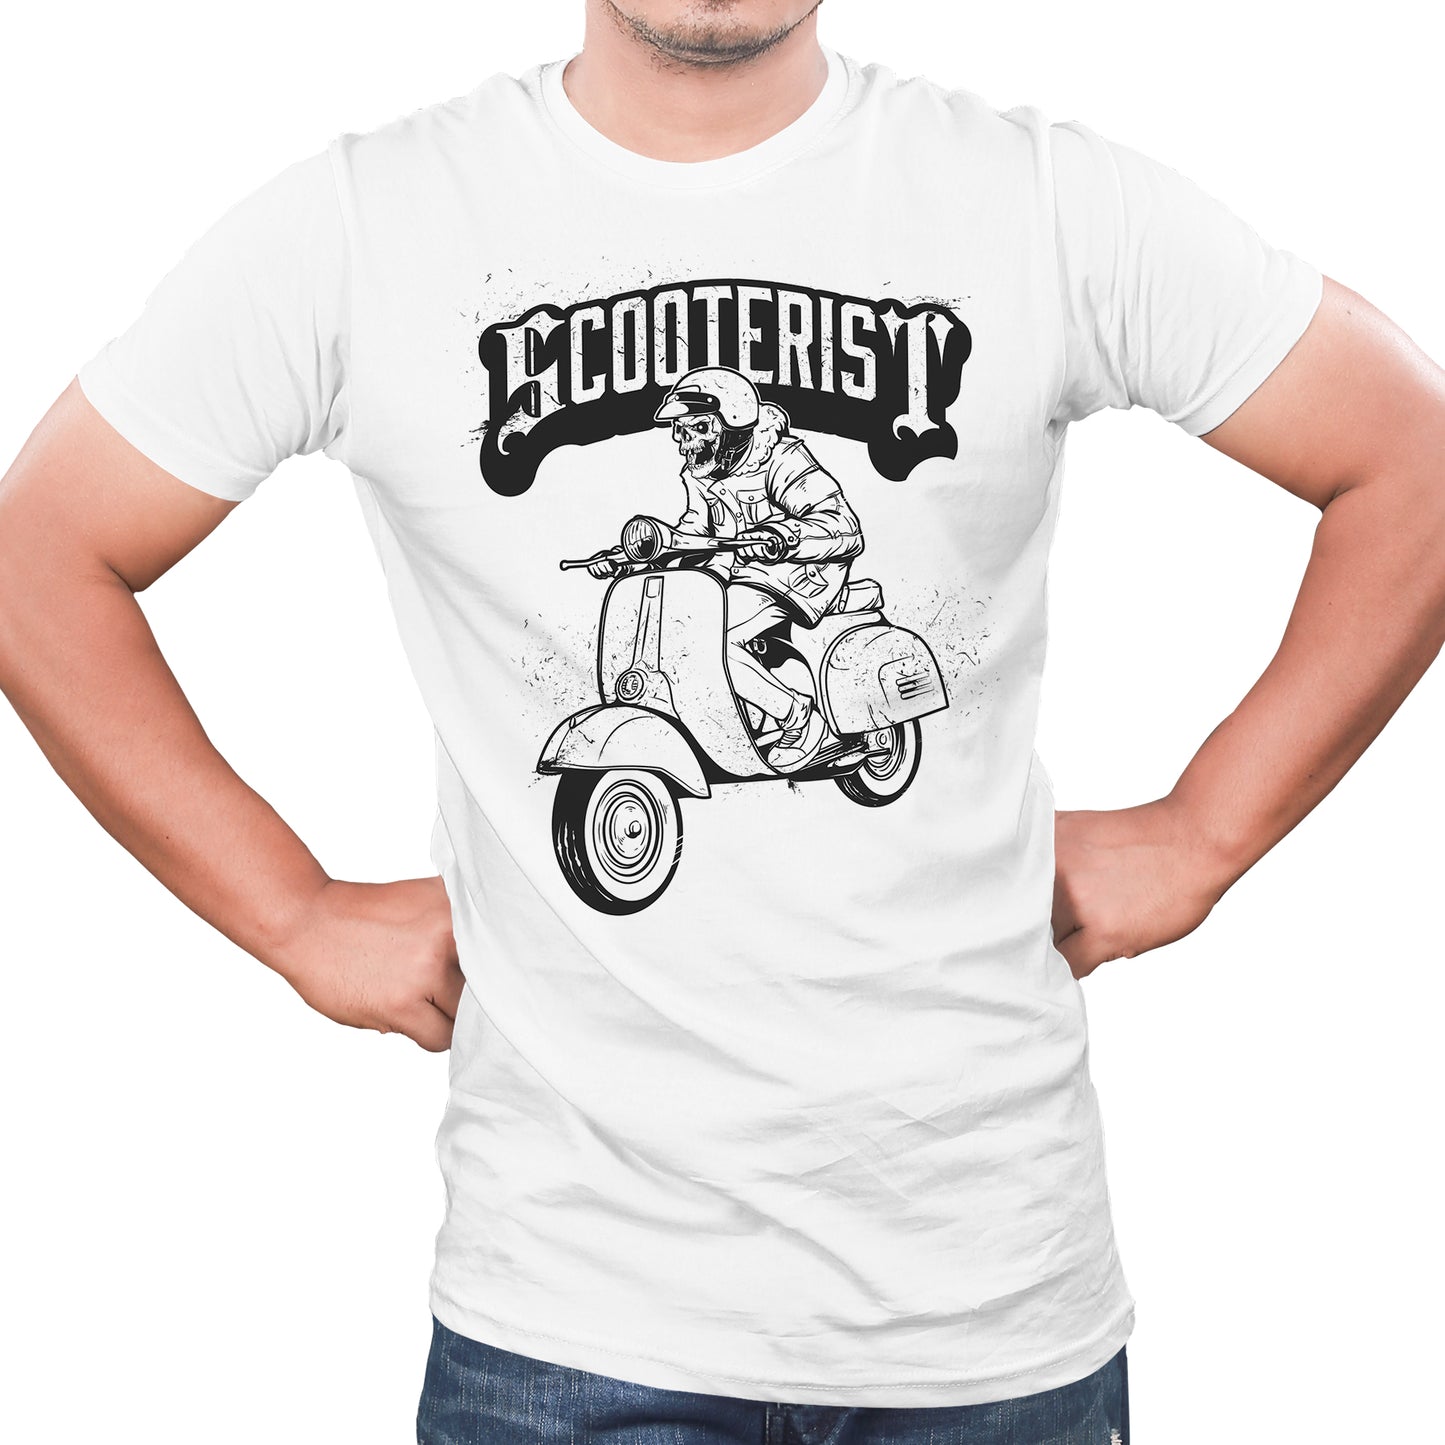 Scooterist quote Biker t shirts -White